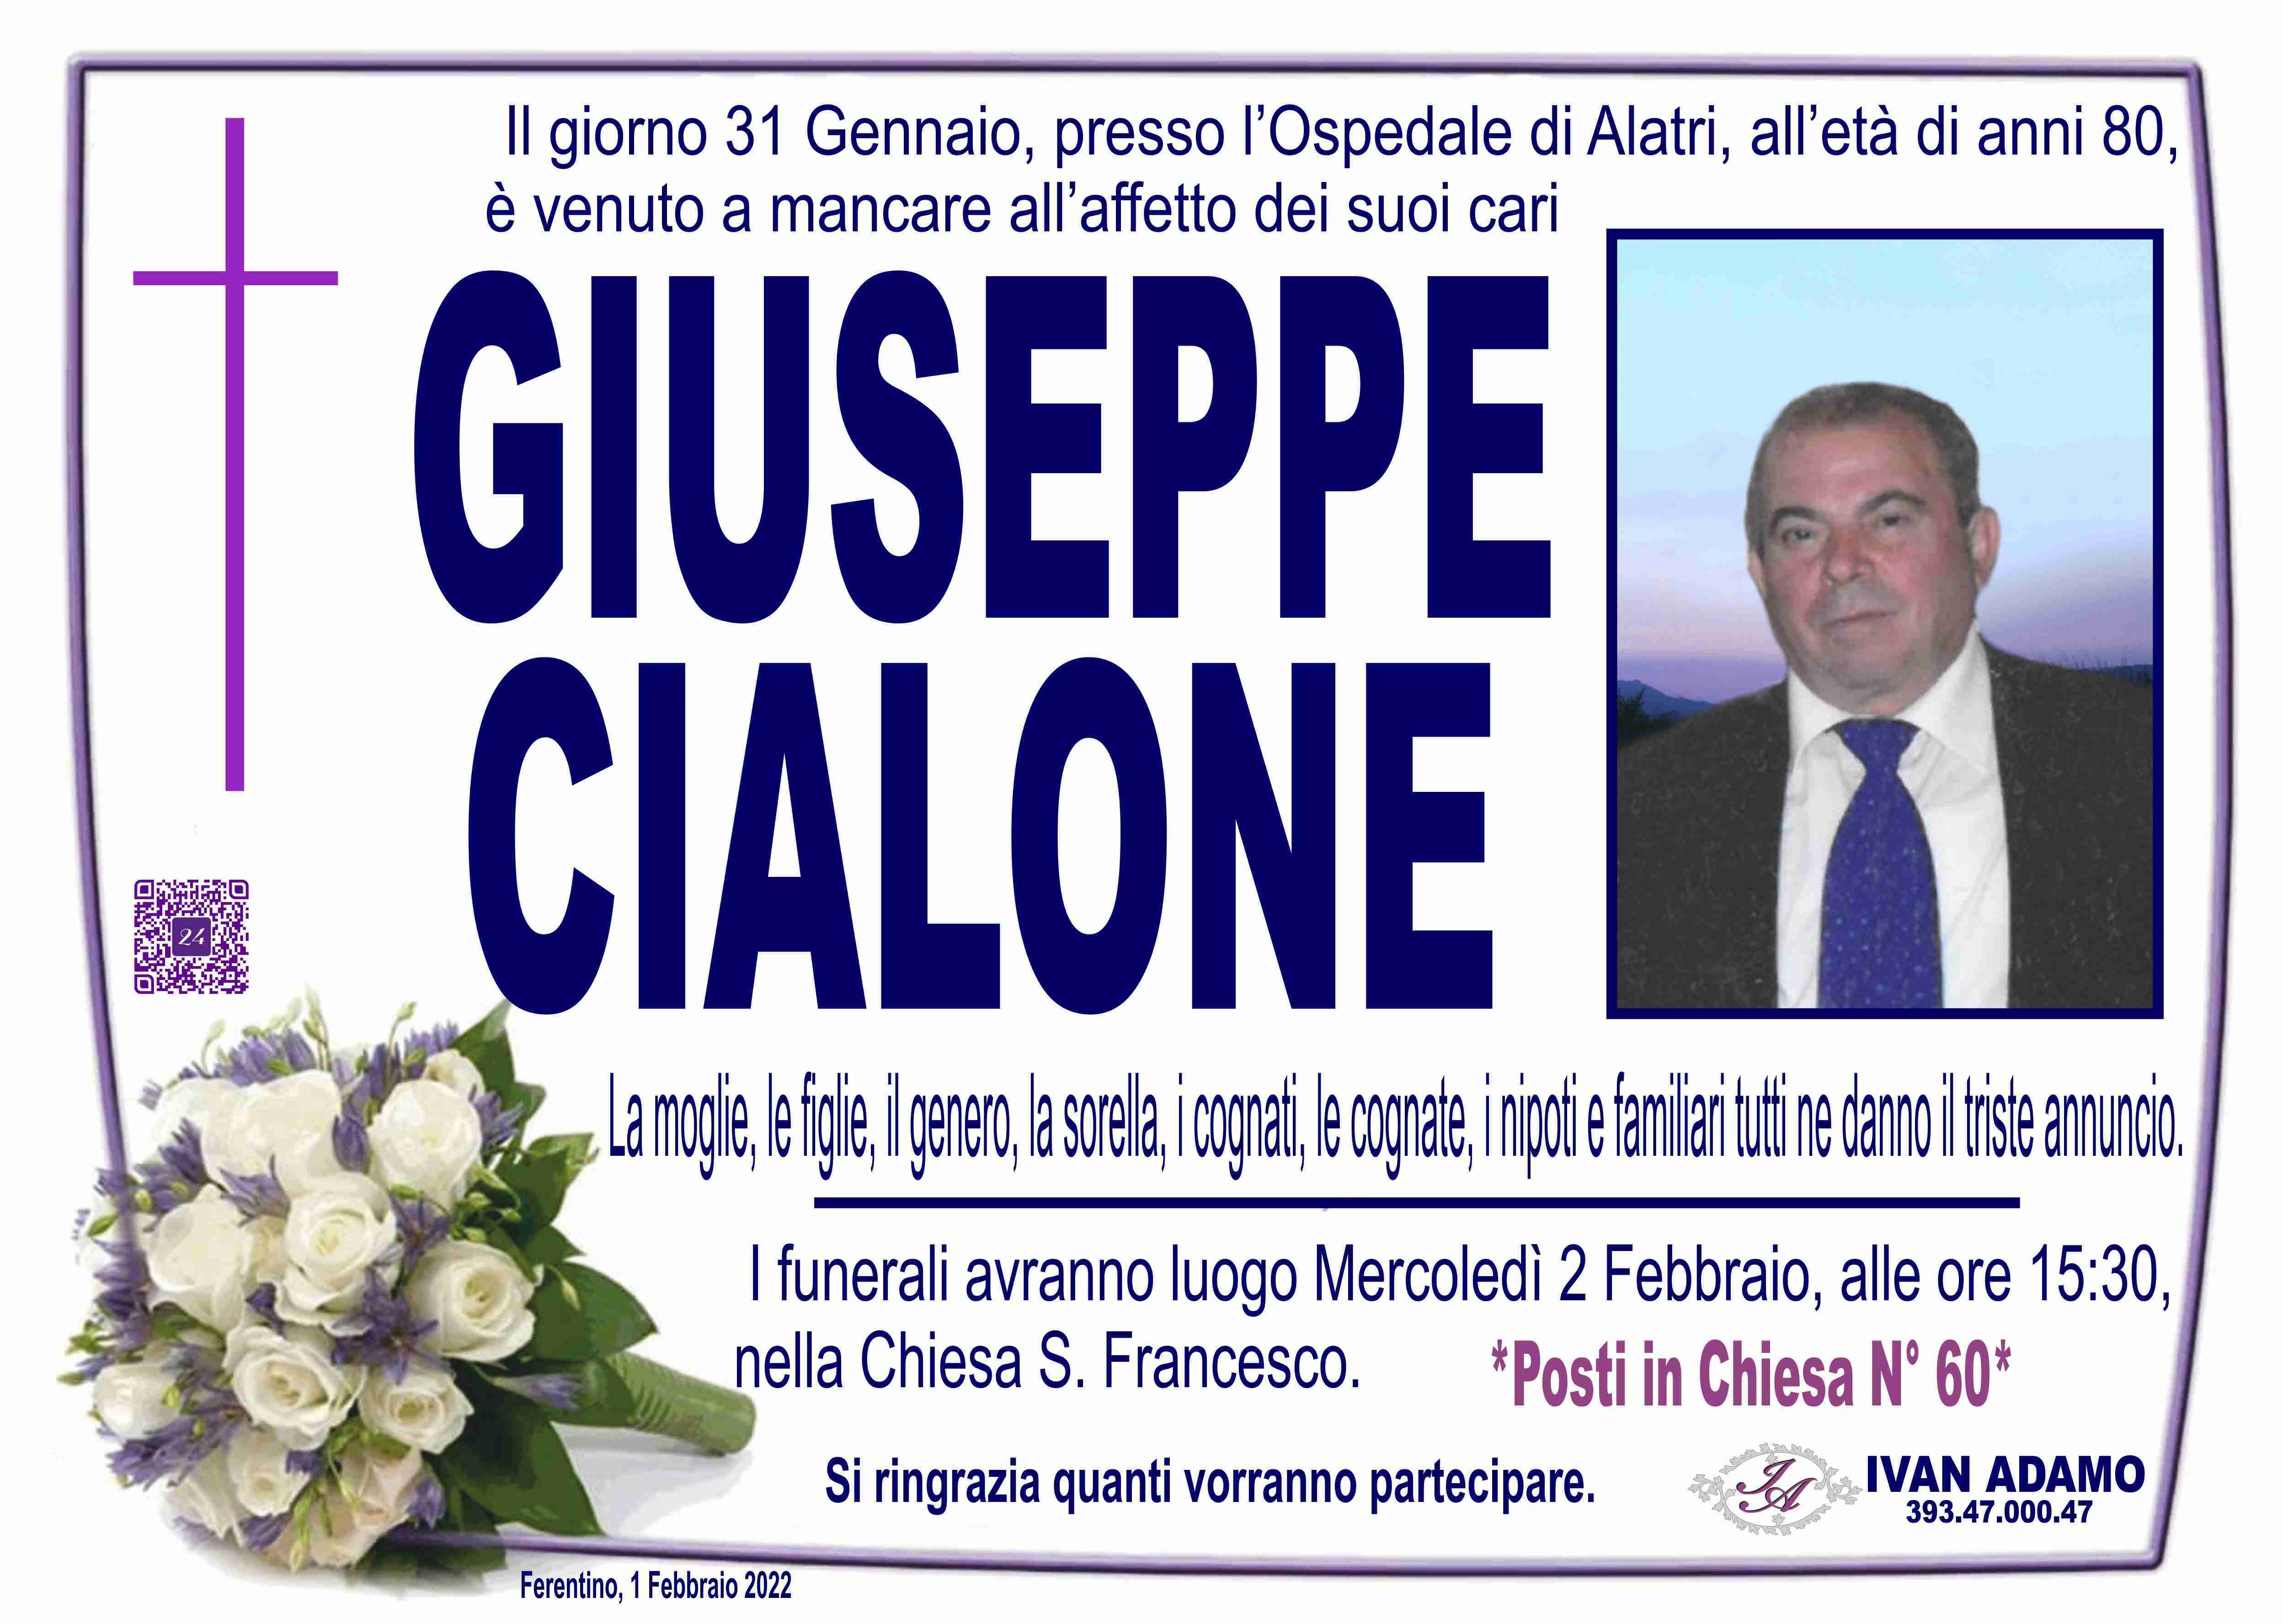 Giuseppe Cialone